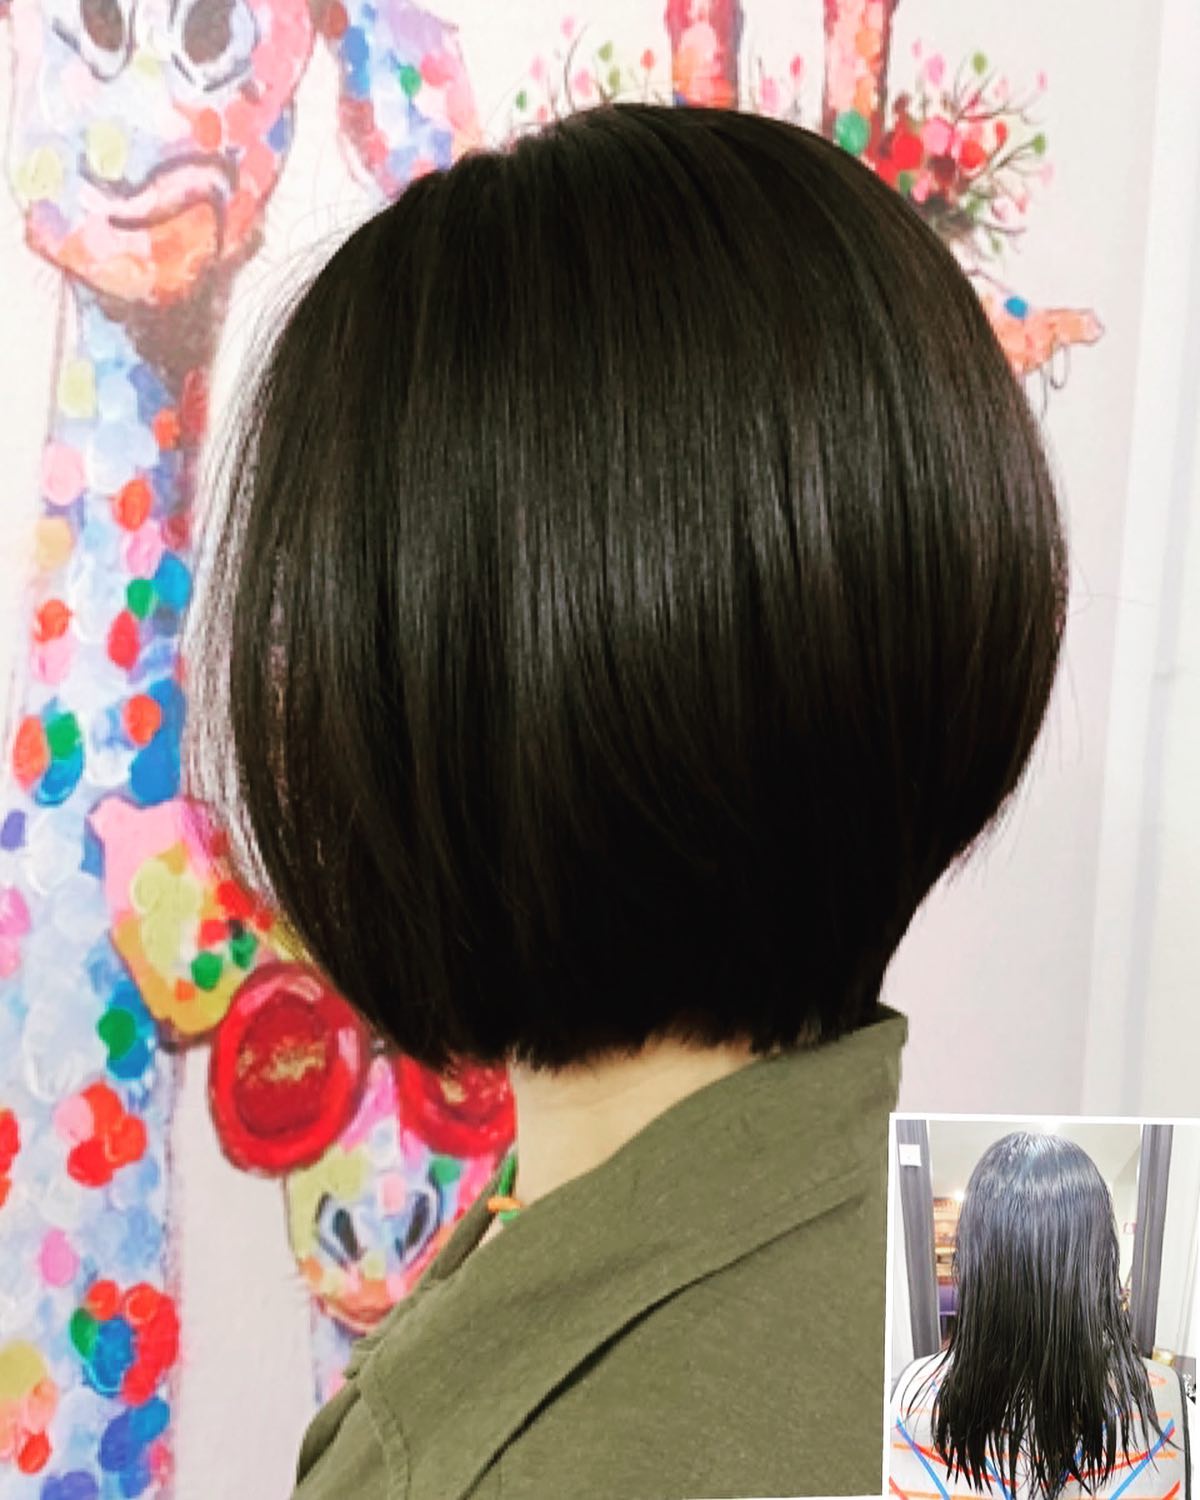 Cut, straightening, Olaplex Milbon Treatment
ทำผมโดยช่างญา ช่างทำผมสไตล์ญี่ปุ่น 
️ Free parking available 
ร้านเปิดให้บริการ 9.00-18.30 
สำรองคิวได้ที่เบอร์
️02-662-7106
LINE account
https://lin.ee/3Cm0Ksiac  #coco106 # 106 hair # digitalperm # coolperm #color # hiligth #milbon #salon # beauty #treatment #straight #cut #soda shower # shot hair # long hair #japan # bangkok #sukhumvit39 # #ร้านเสริมสวยในกรุงเทพ